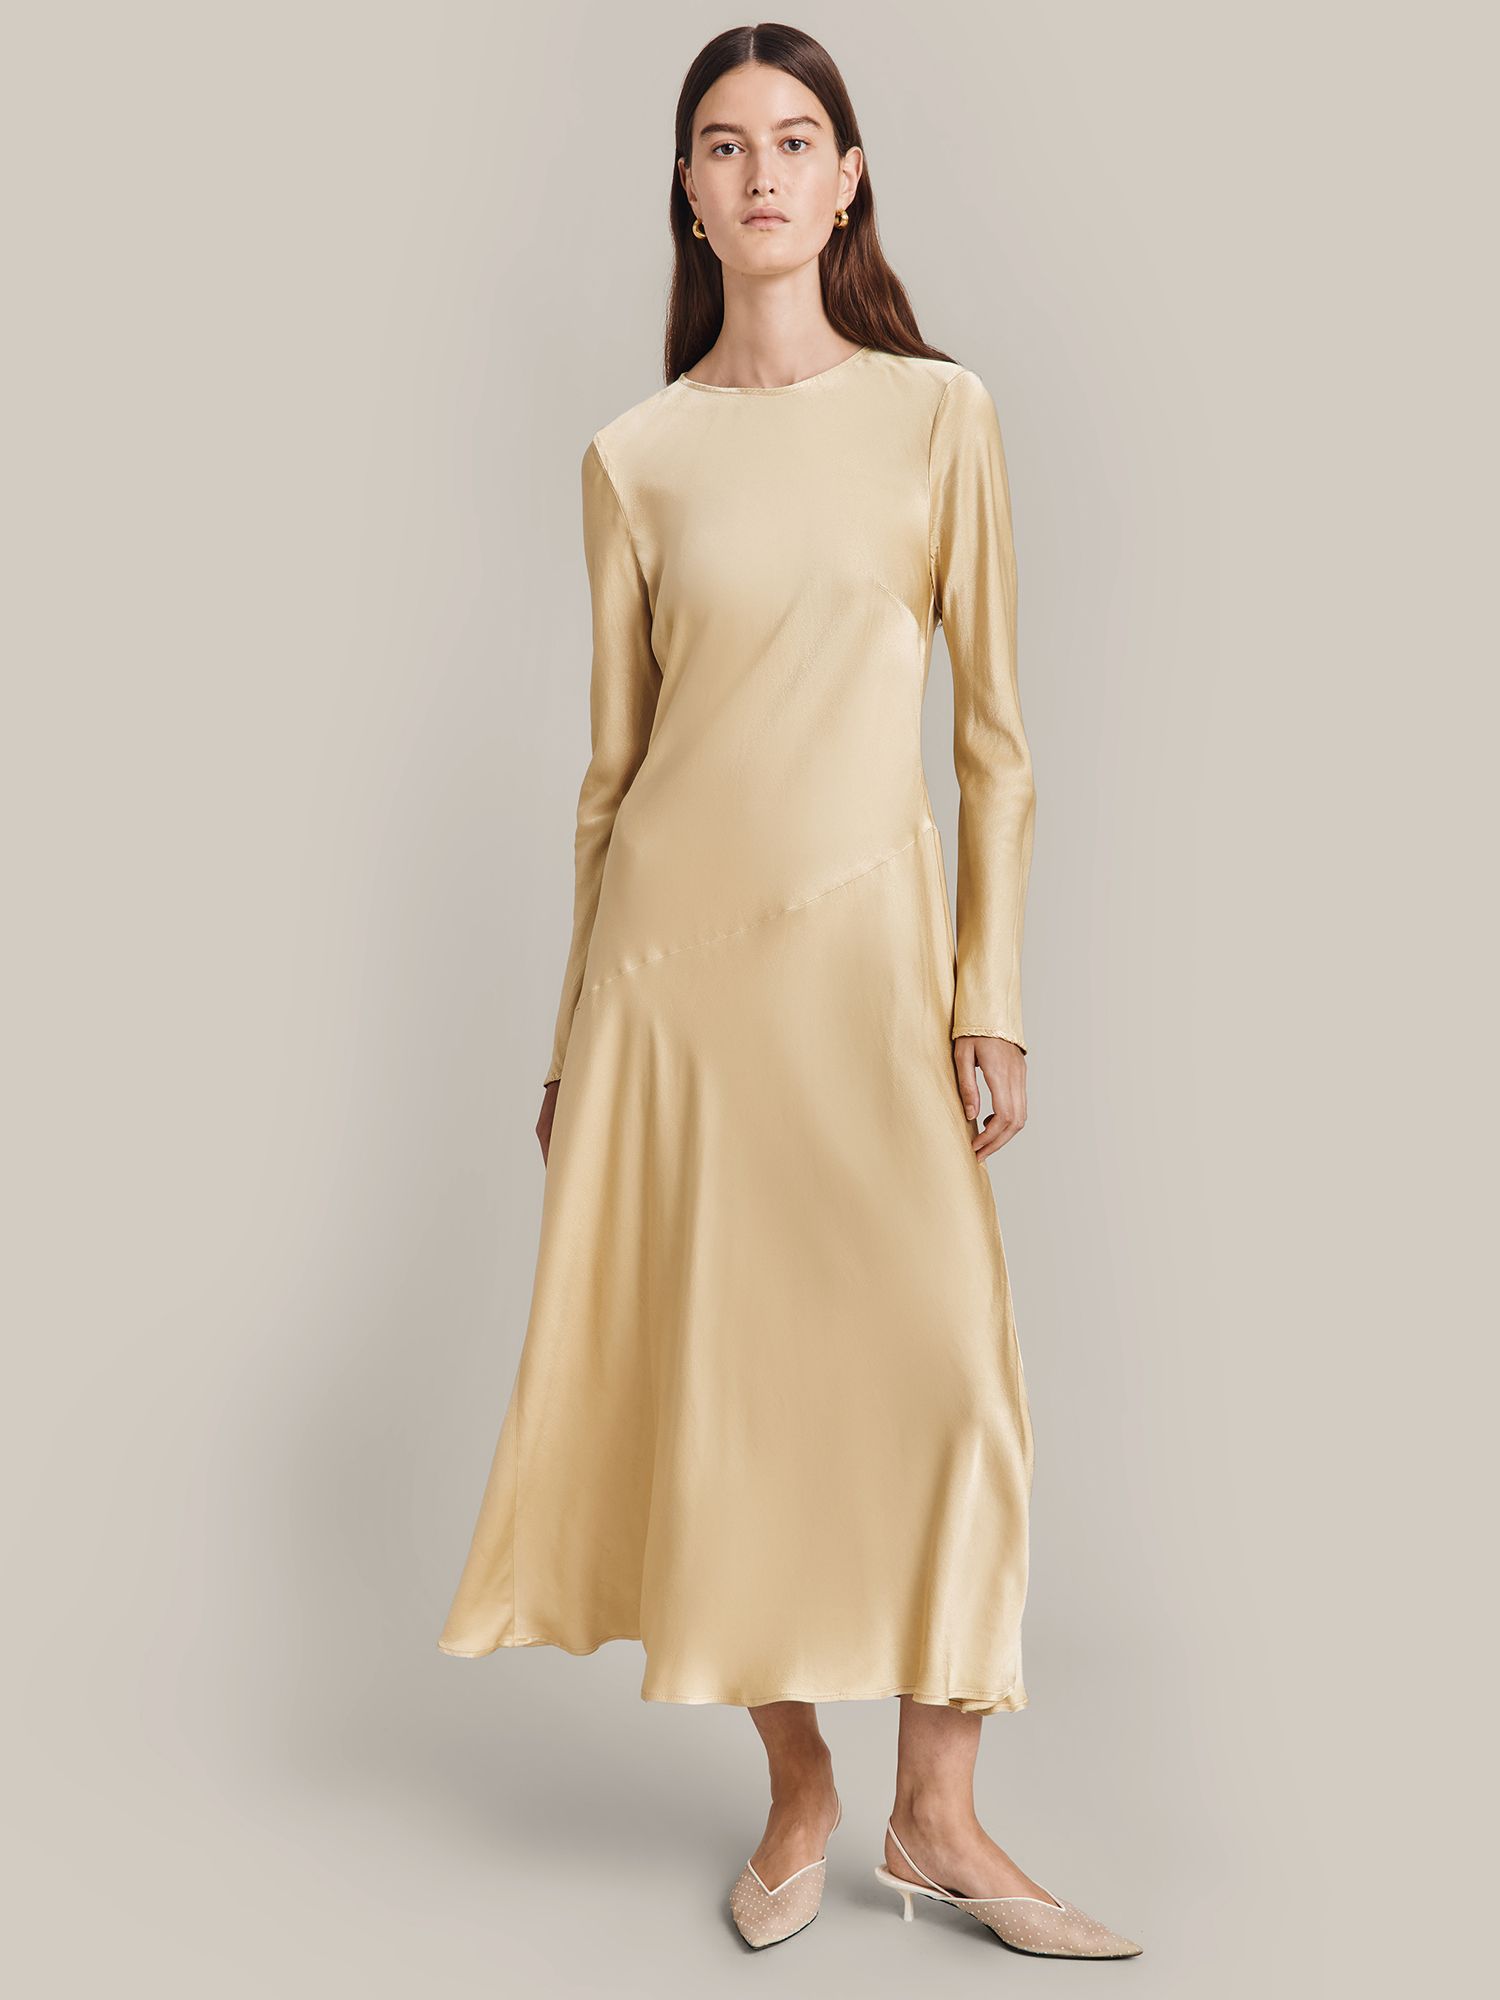 Ghost Lois Bias Cut Satin Midi Dress, Yellow, S